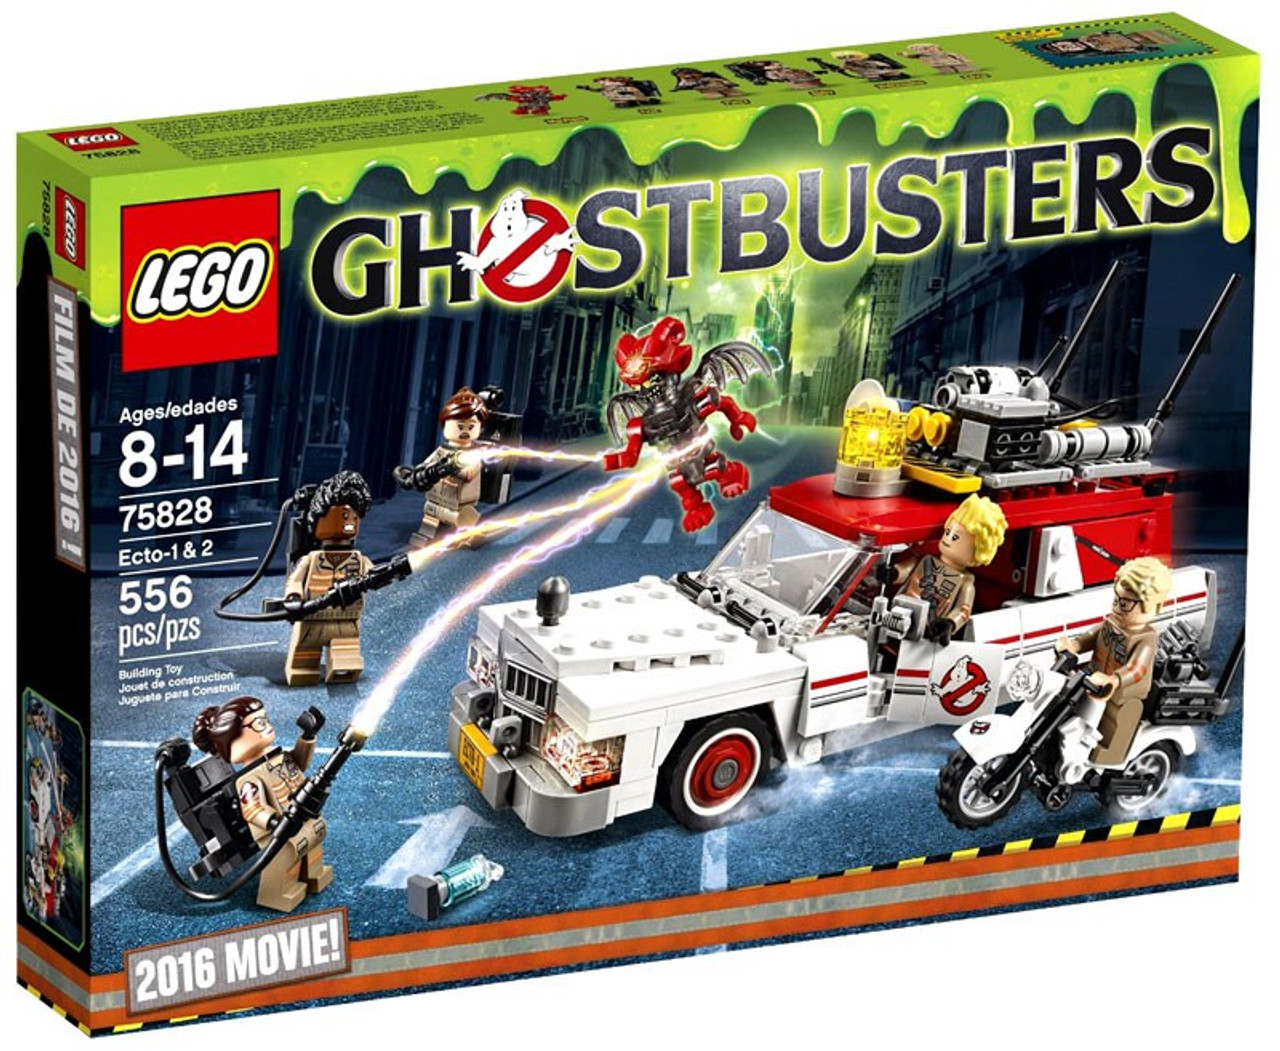 ghostbusters ecto 1 lego set